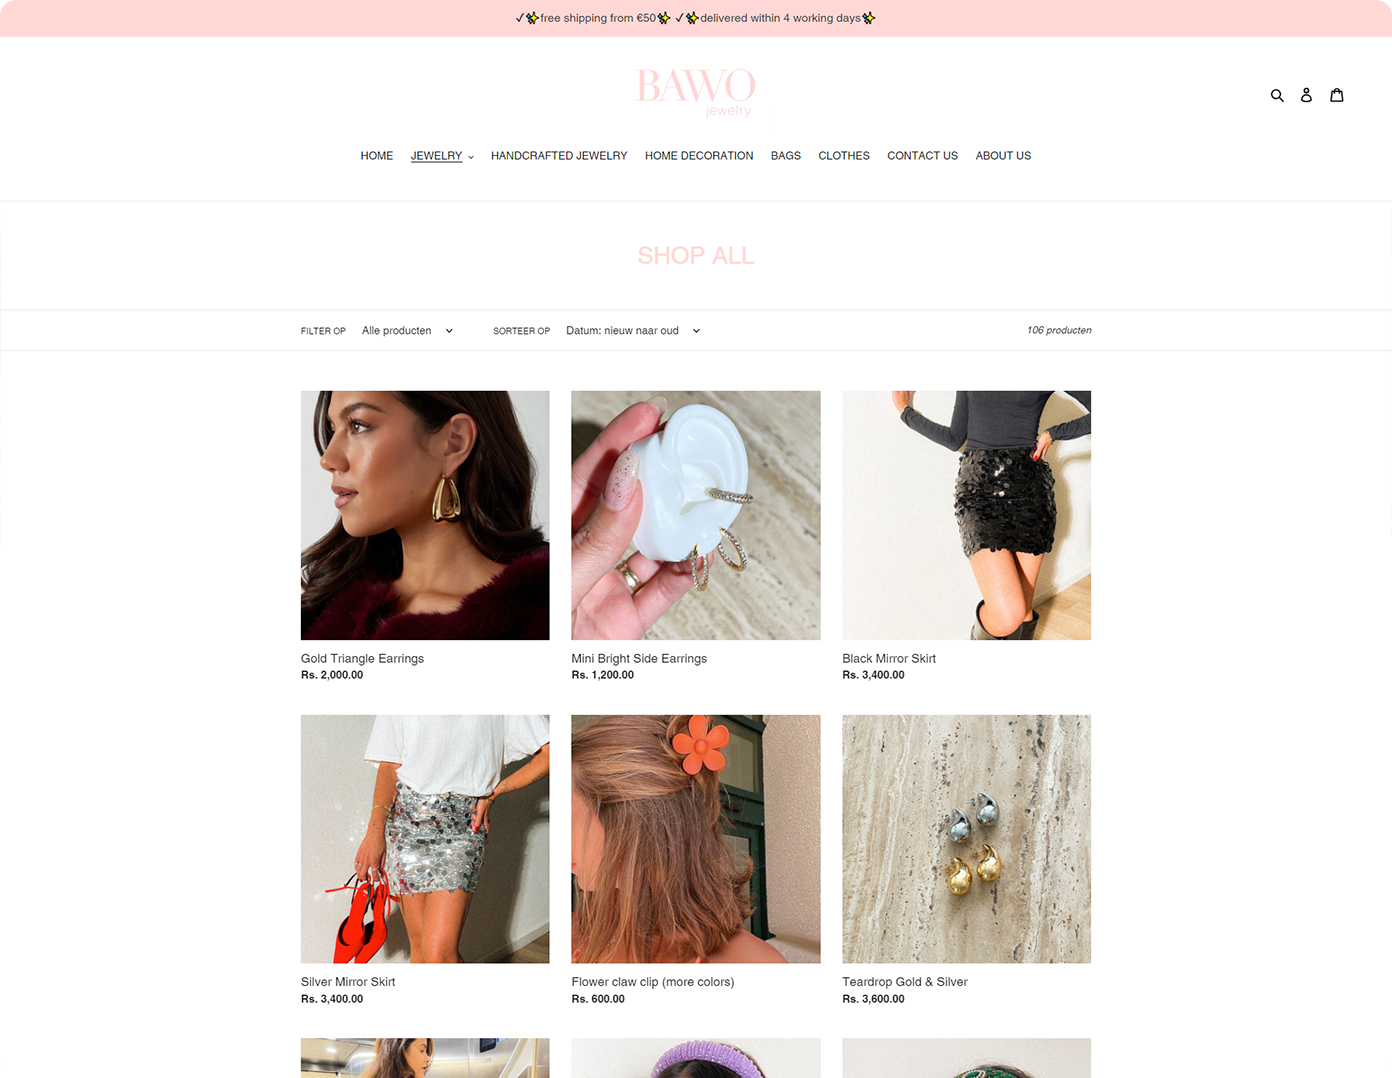 Bawo Jewelry’s product page